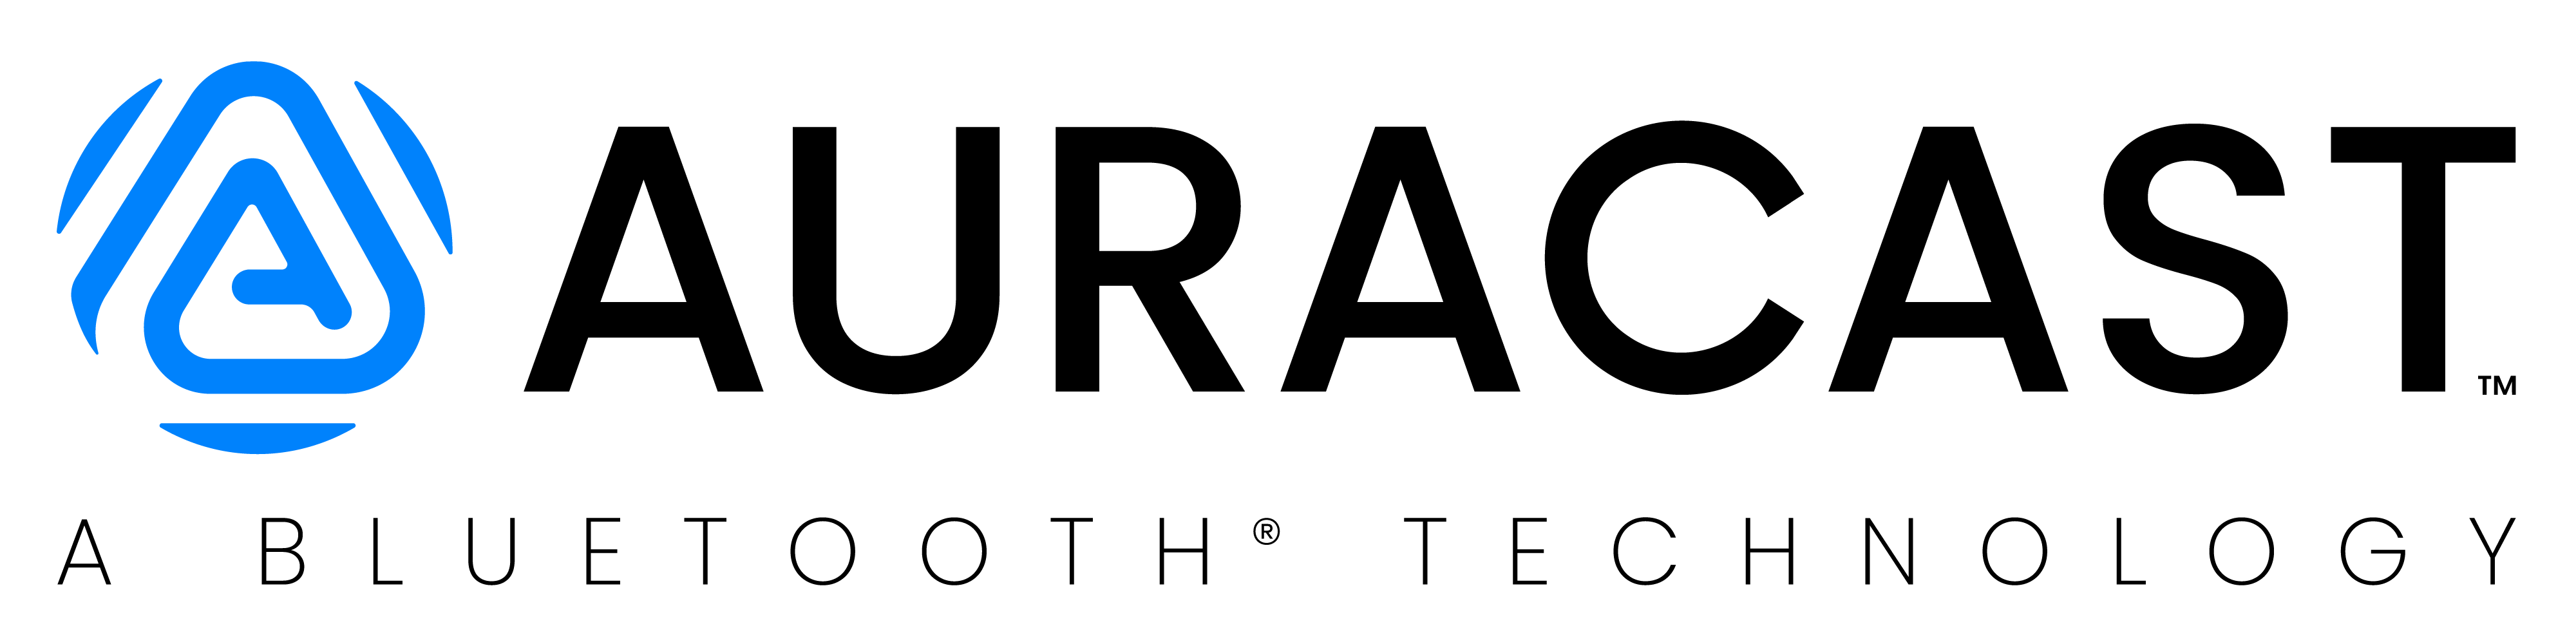 Auracastのロゴ